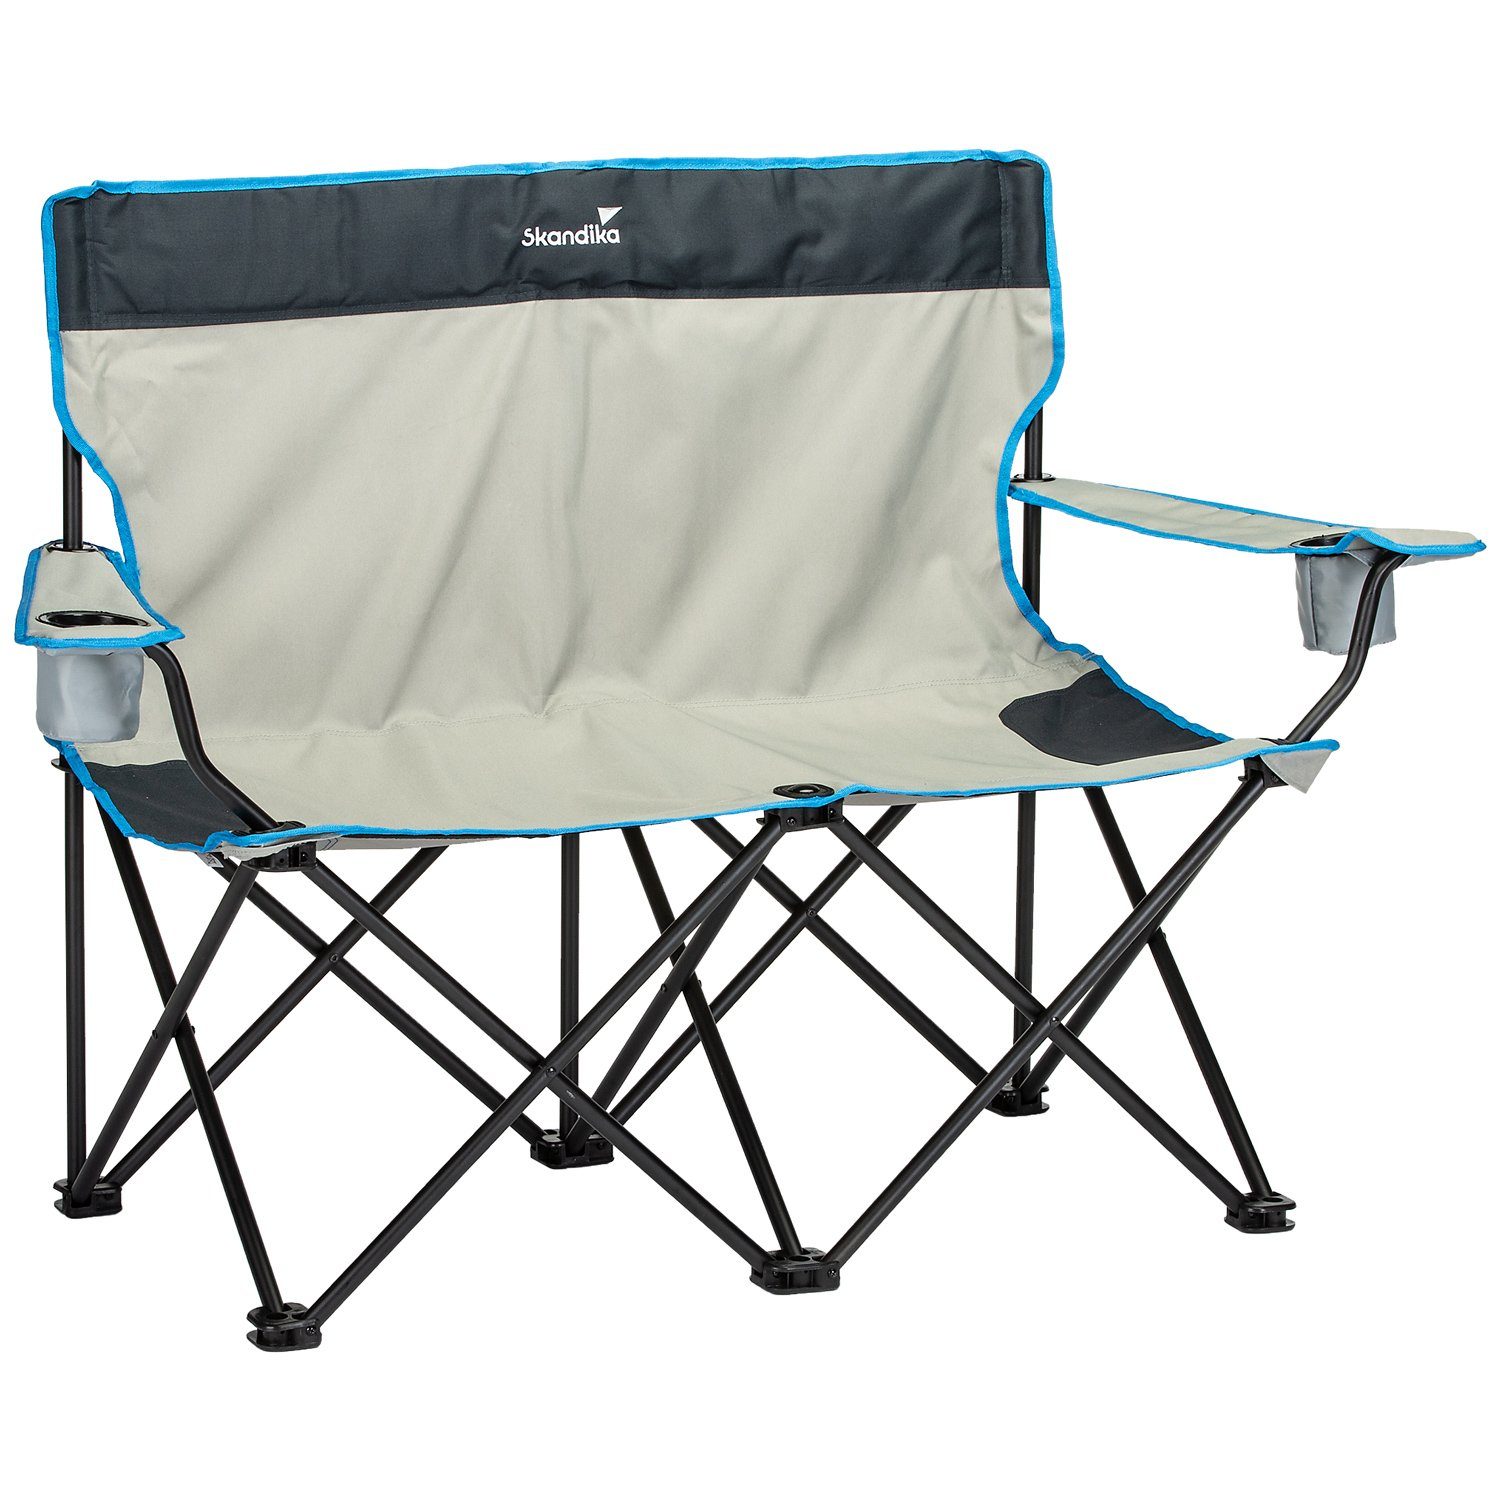 Skandika Campingstuhl »Double Folding Chair, faltbar, Klappstuhl« (2  integrierte Getränkehalter, Outdoor, Angeln, Festival, max. Belastung von  200Kg), für 2 Personen, XXL Campingbank